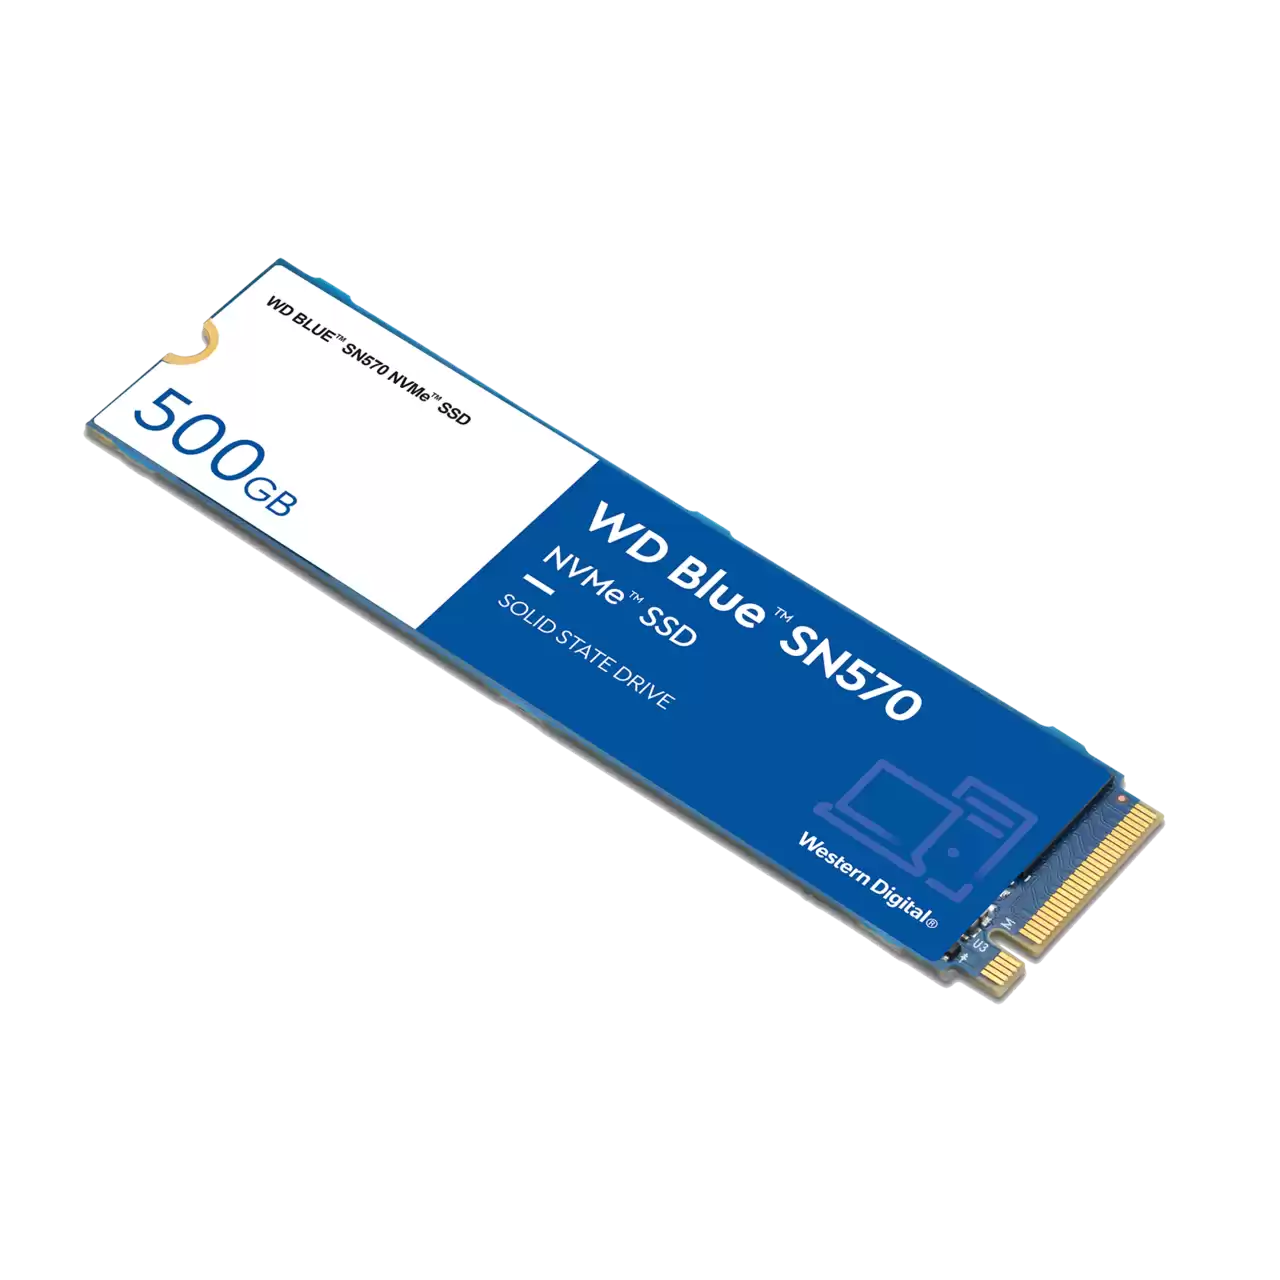 اس اس دی اینترنال وسترن دیجیتال WD Blue SN570 NVMe™ SSD ظرفیت 500 گیگابایت